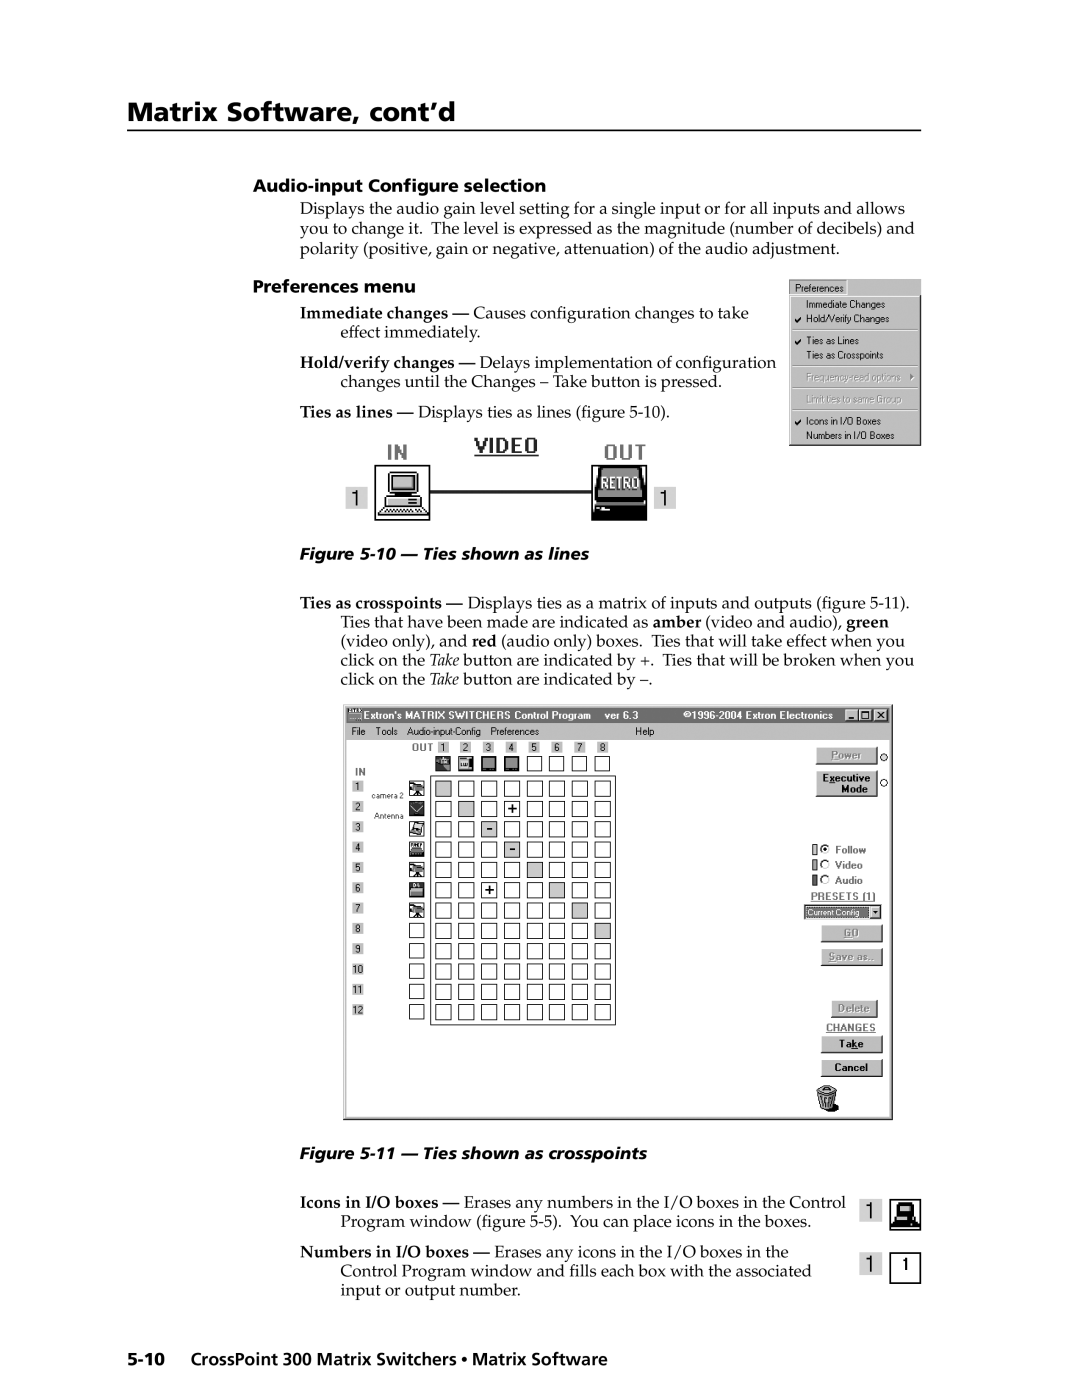 Extron electronic 168 Audio-input Configure selection, Preferences menu, 10 - Ties shown as lines, Matrix Software, cont’d 